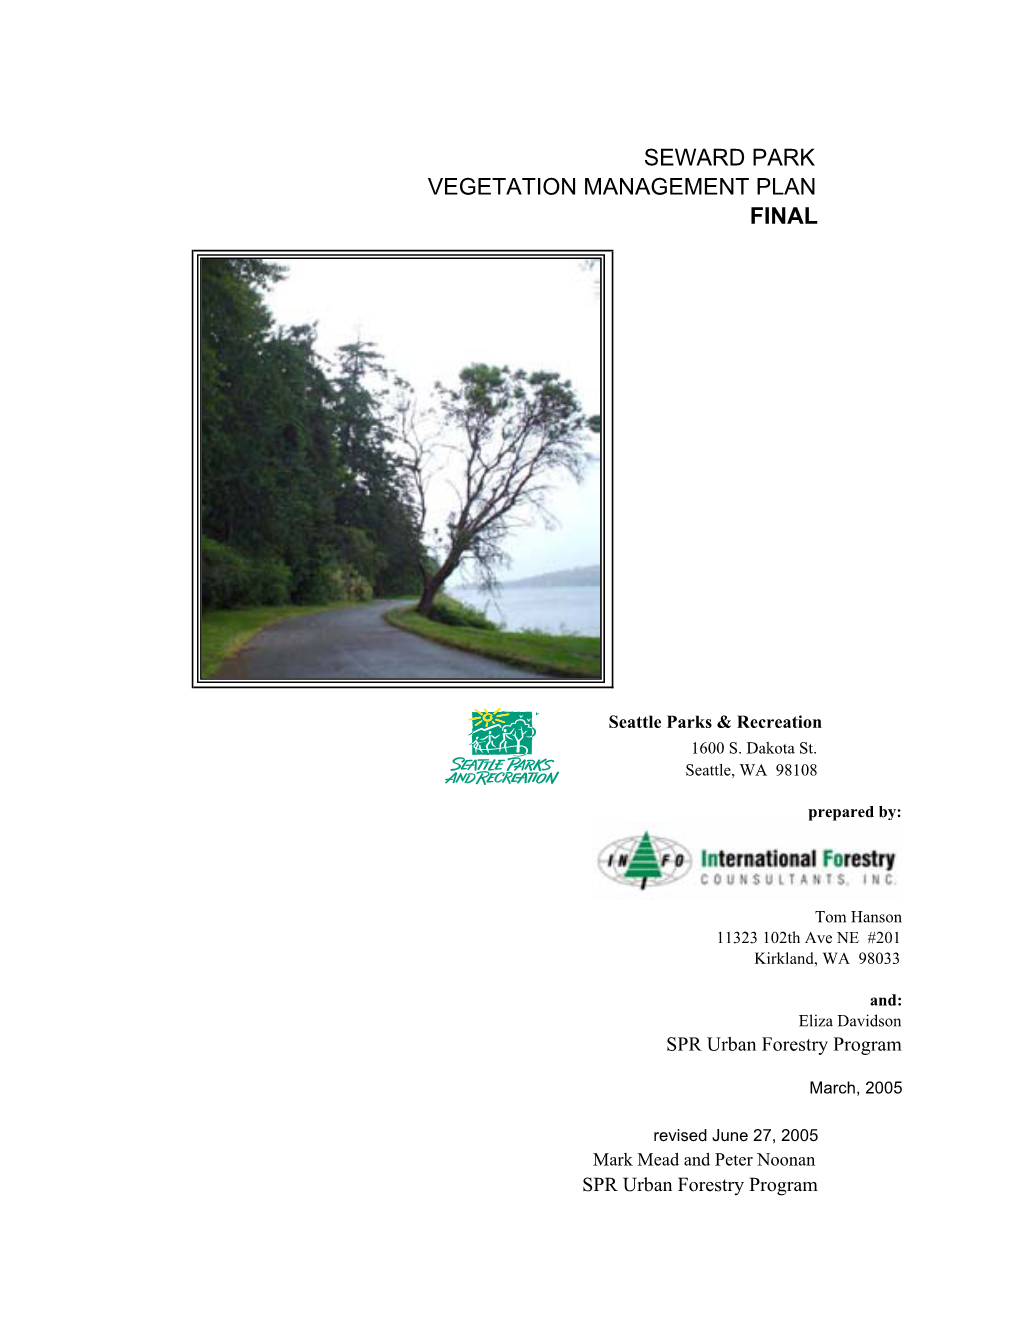 Seward Park Vegetation Management Plan Final